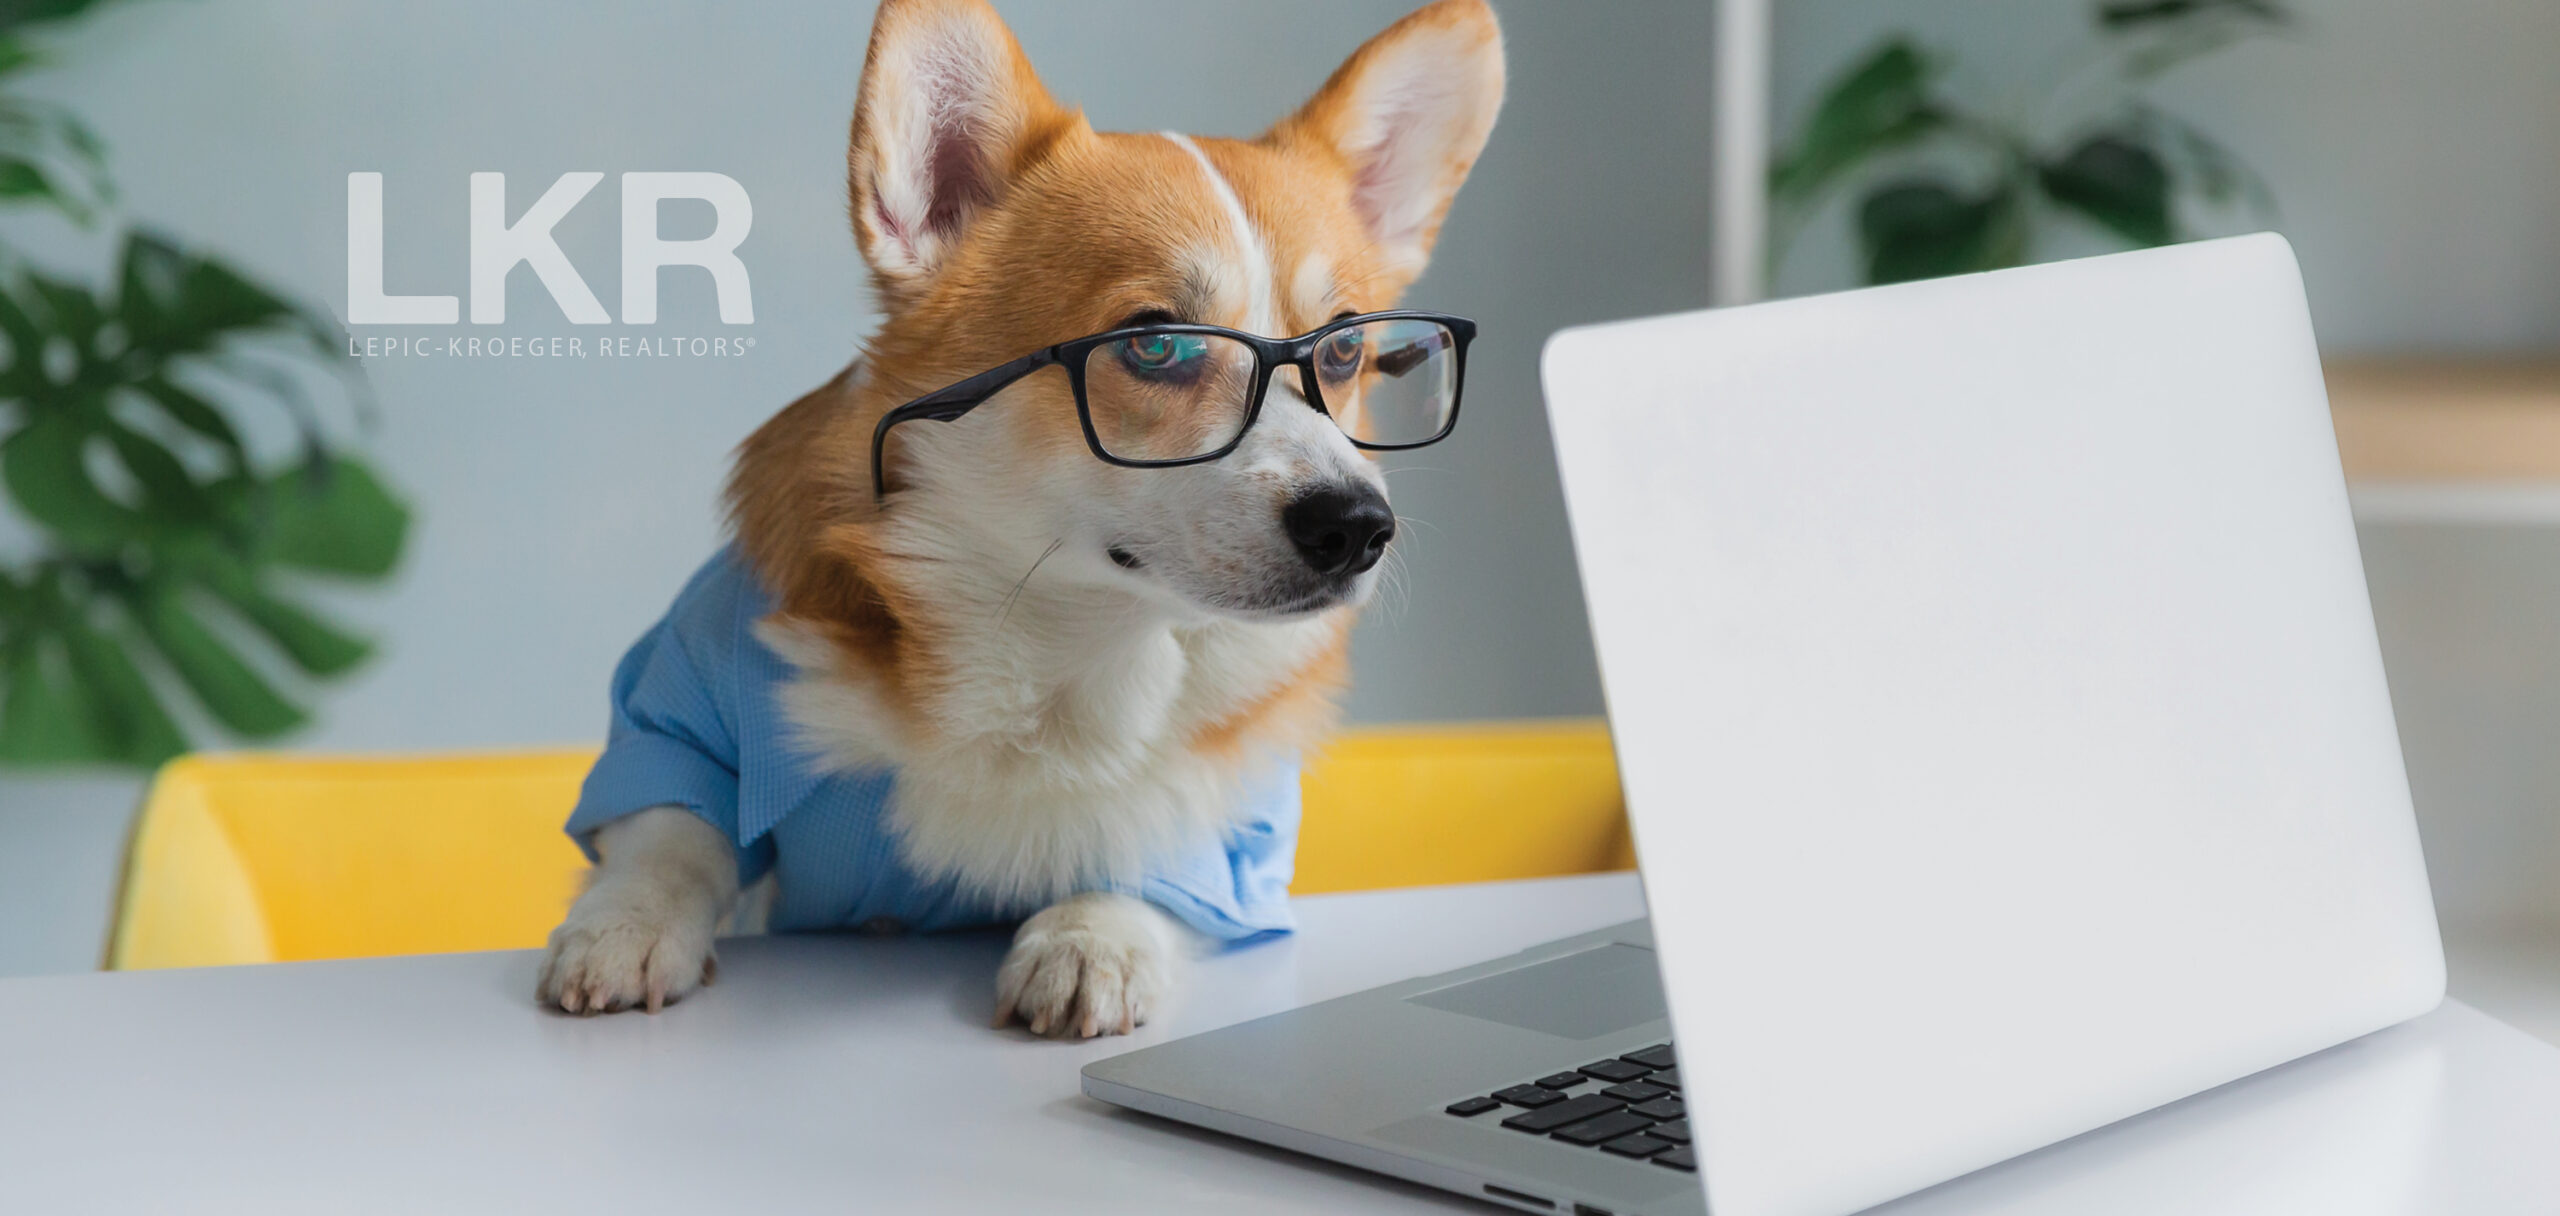 Dog using laptop